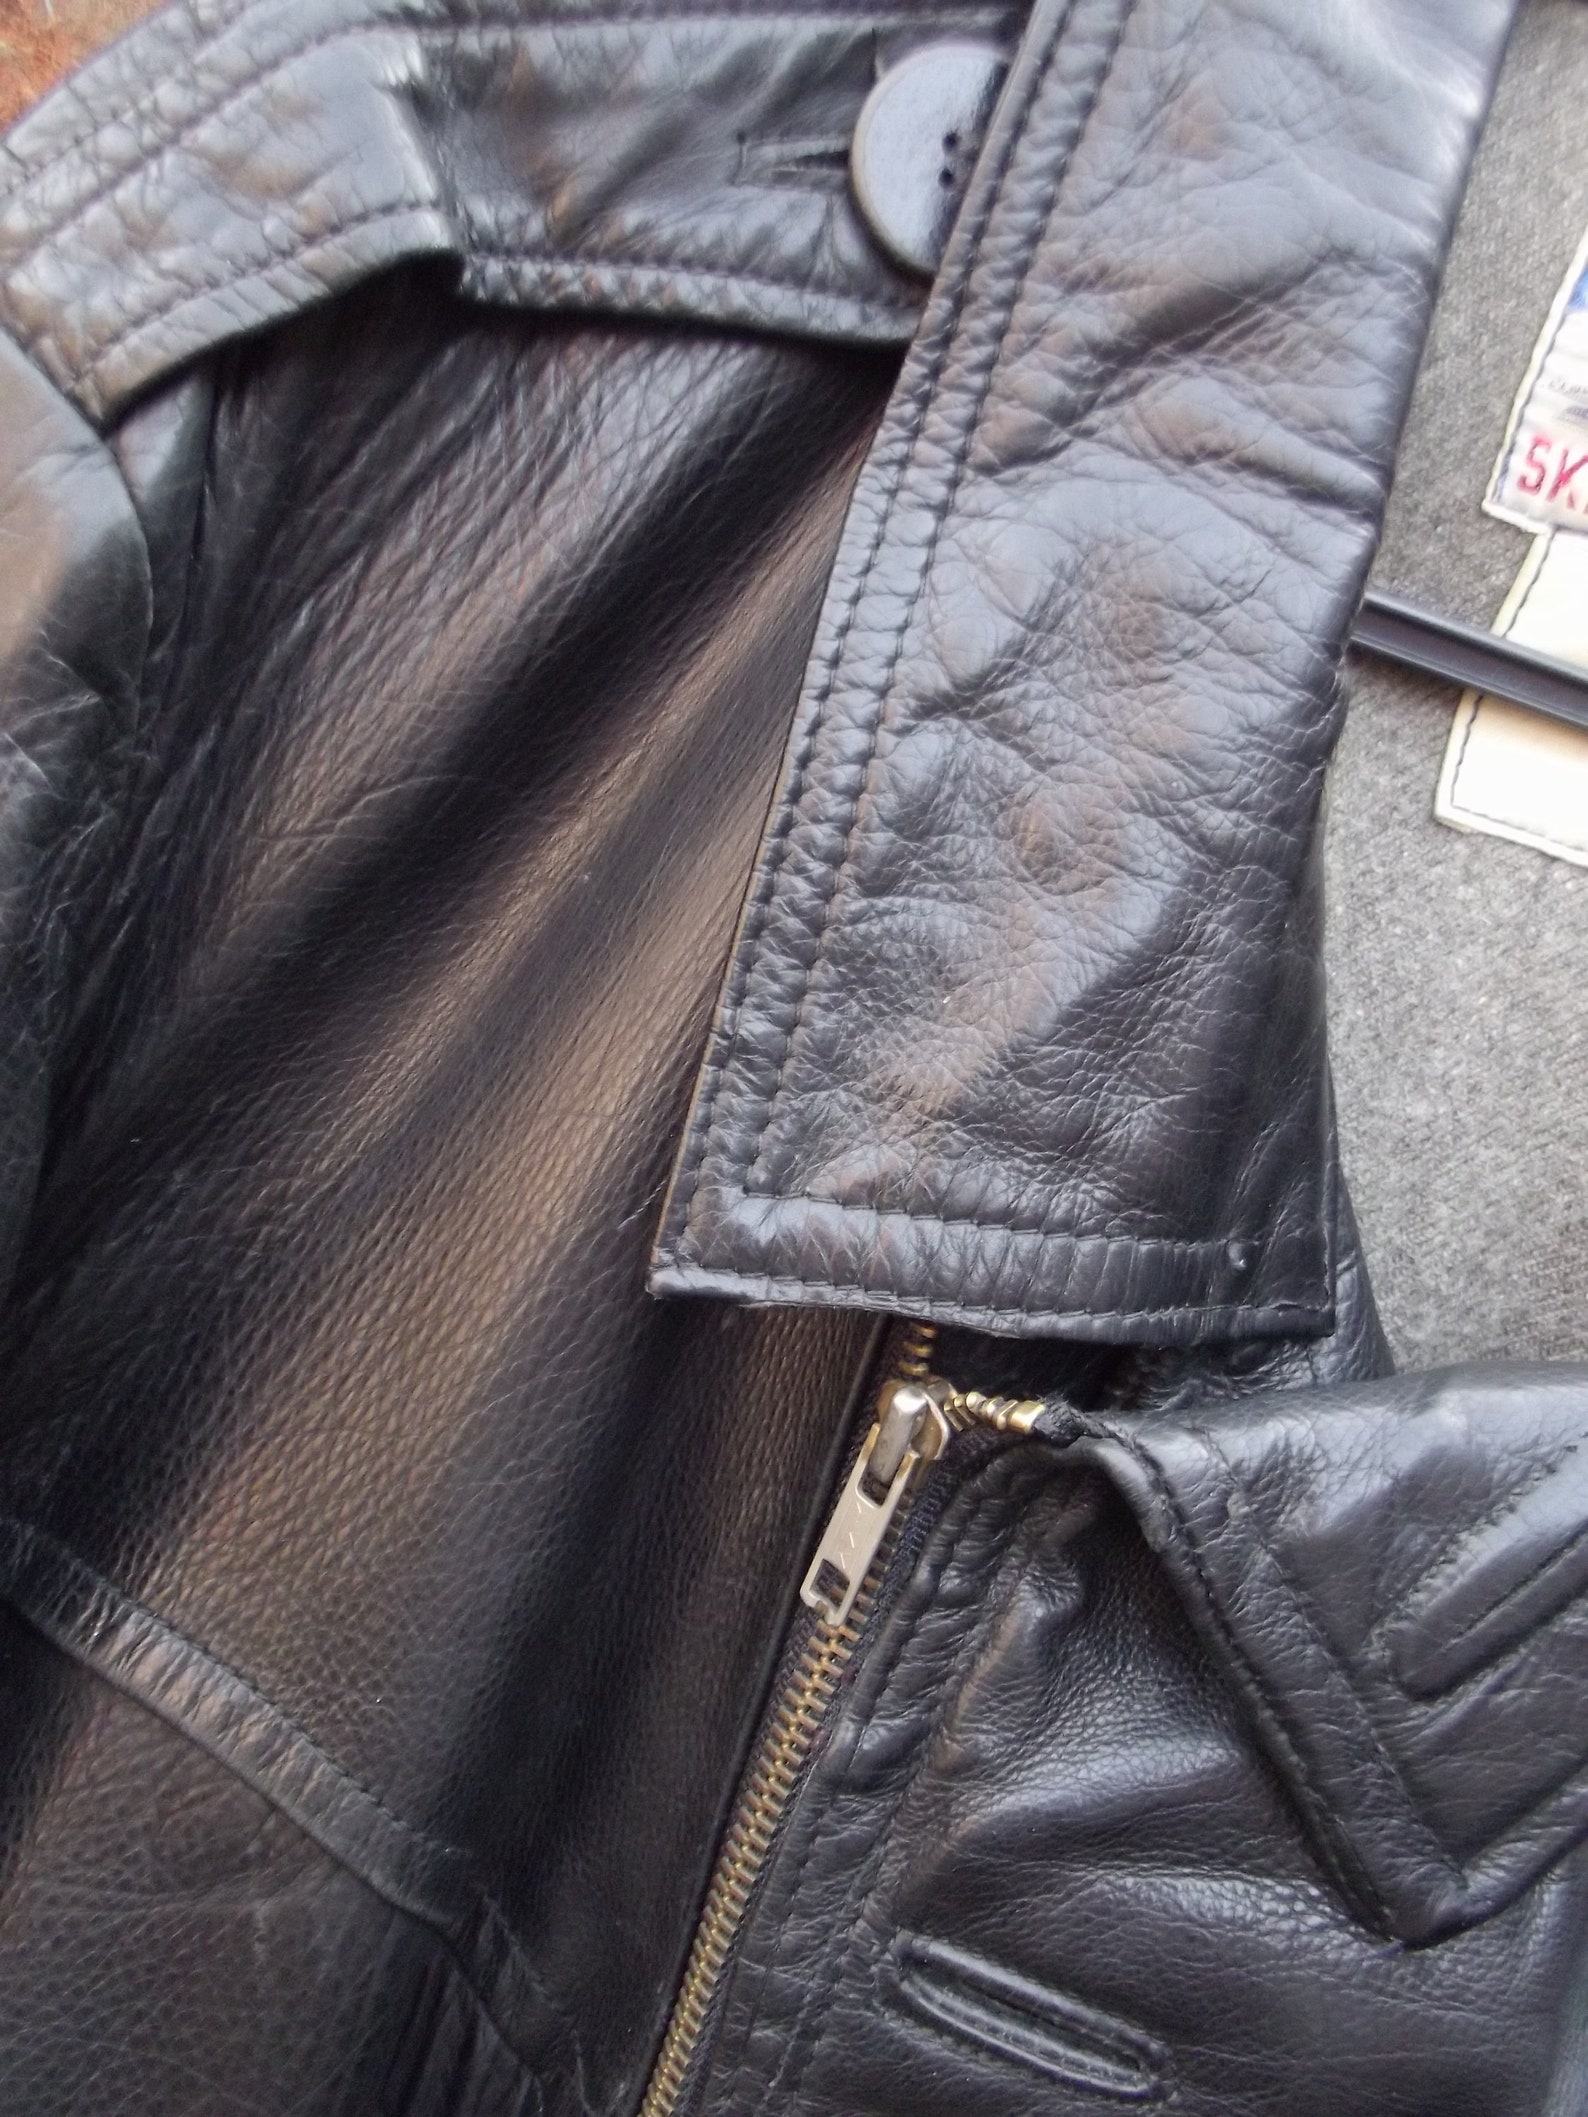 Black Leather Motorcycle Jacket 1940s Skinnarlandinreg. - Etsy